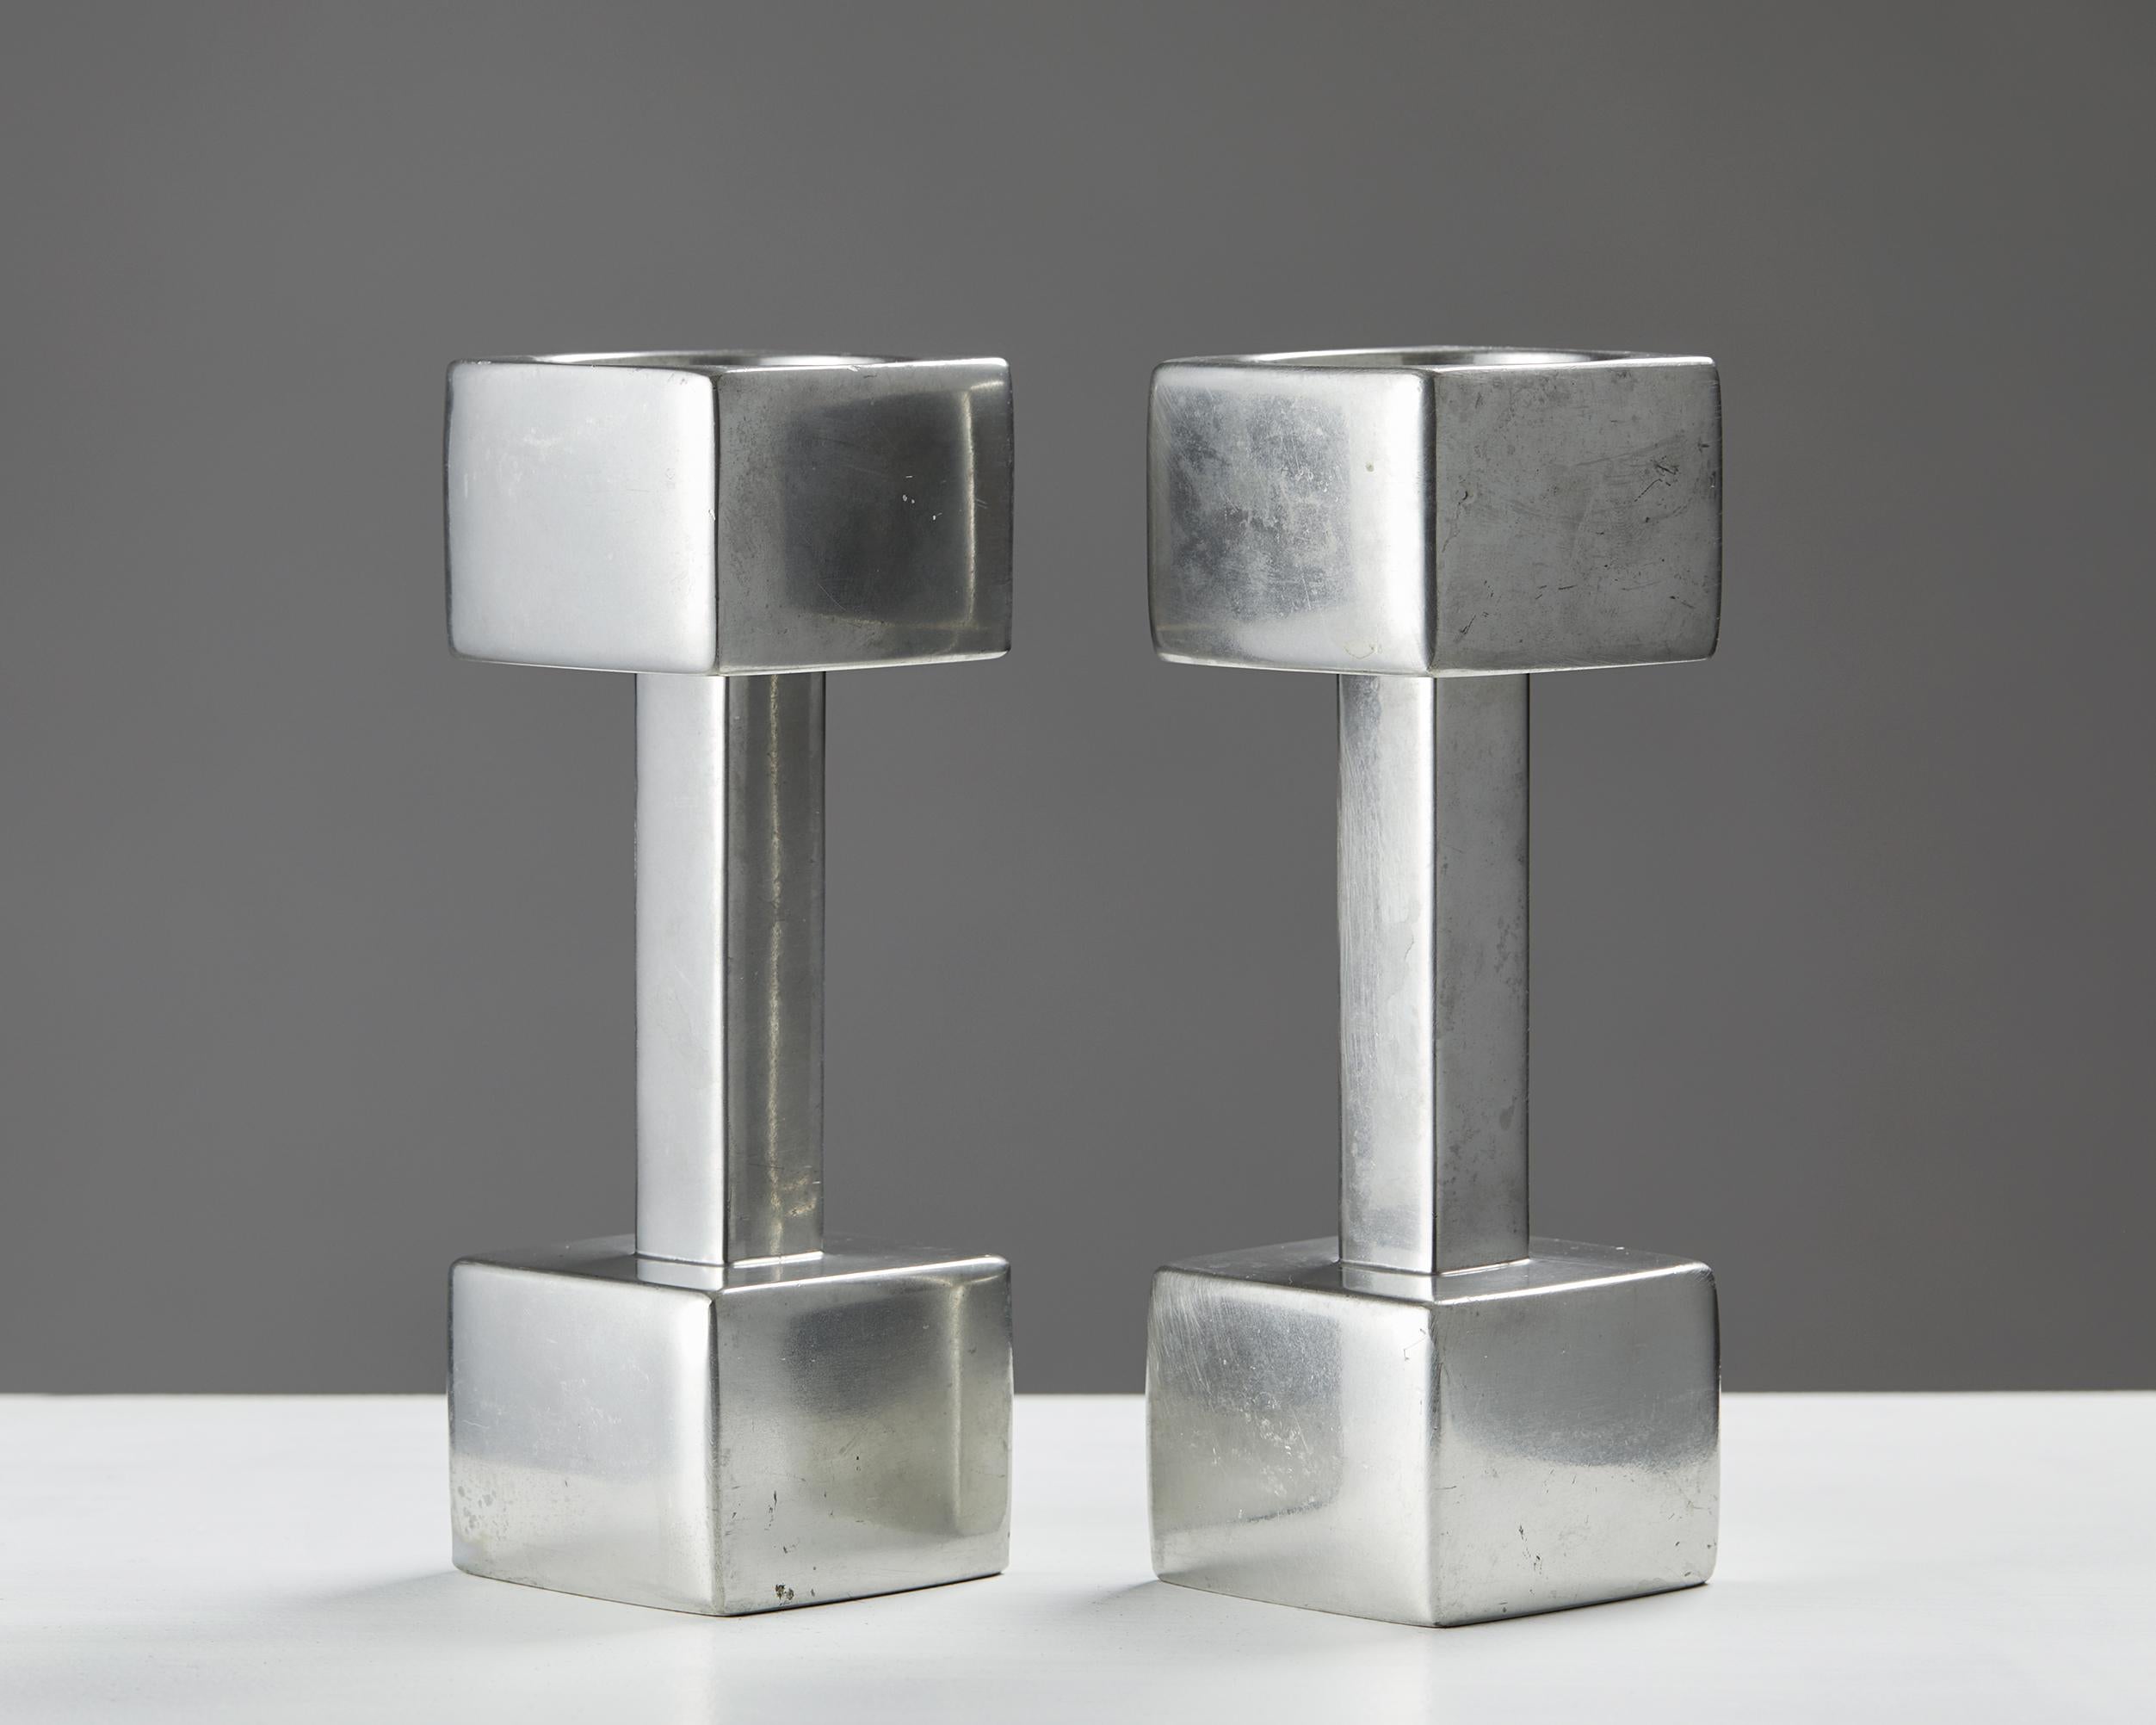 Pair of candlesticks, designed by Astrid Fog for Geust Andersen,
Denmark, 1960's

Polished pewter.

Signed Astrid Fog.

Numbered: 573046

Measures: 
H: 18.3 cm/ 7 14